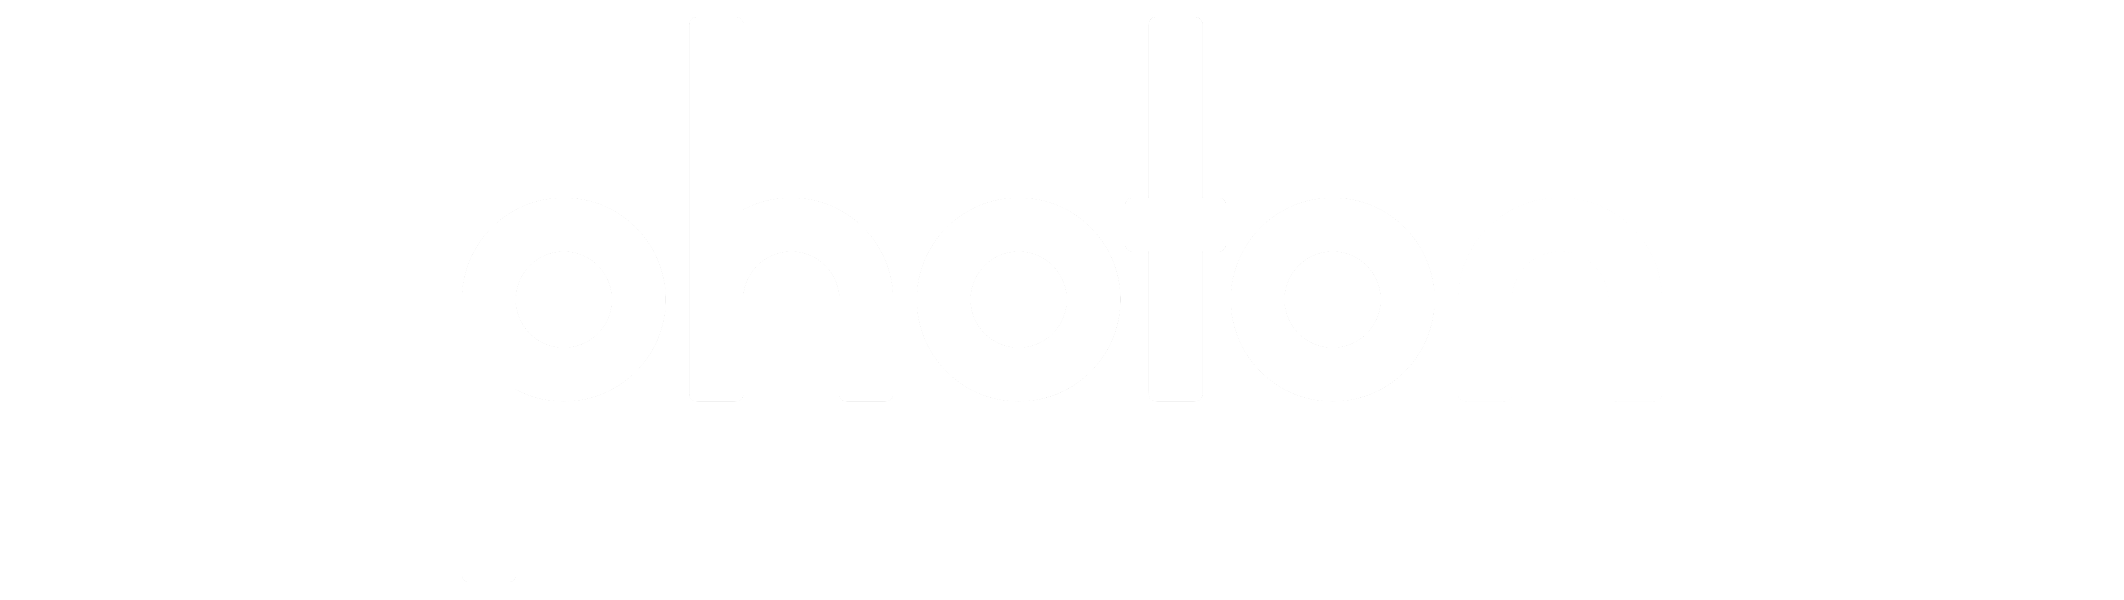 Photon Logo Bianco